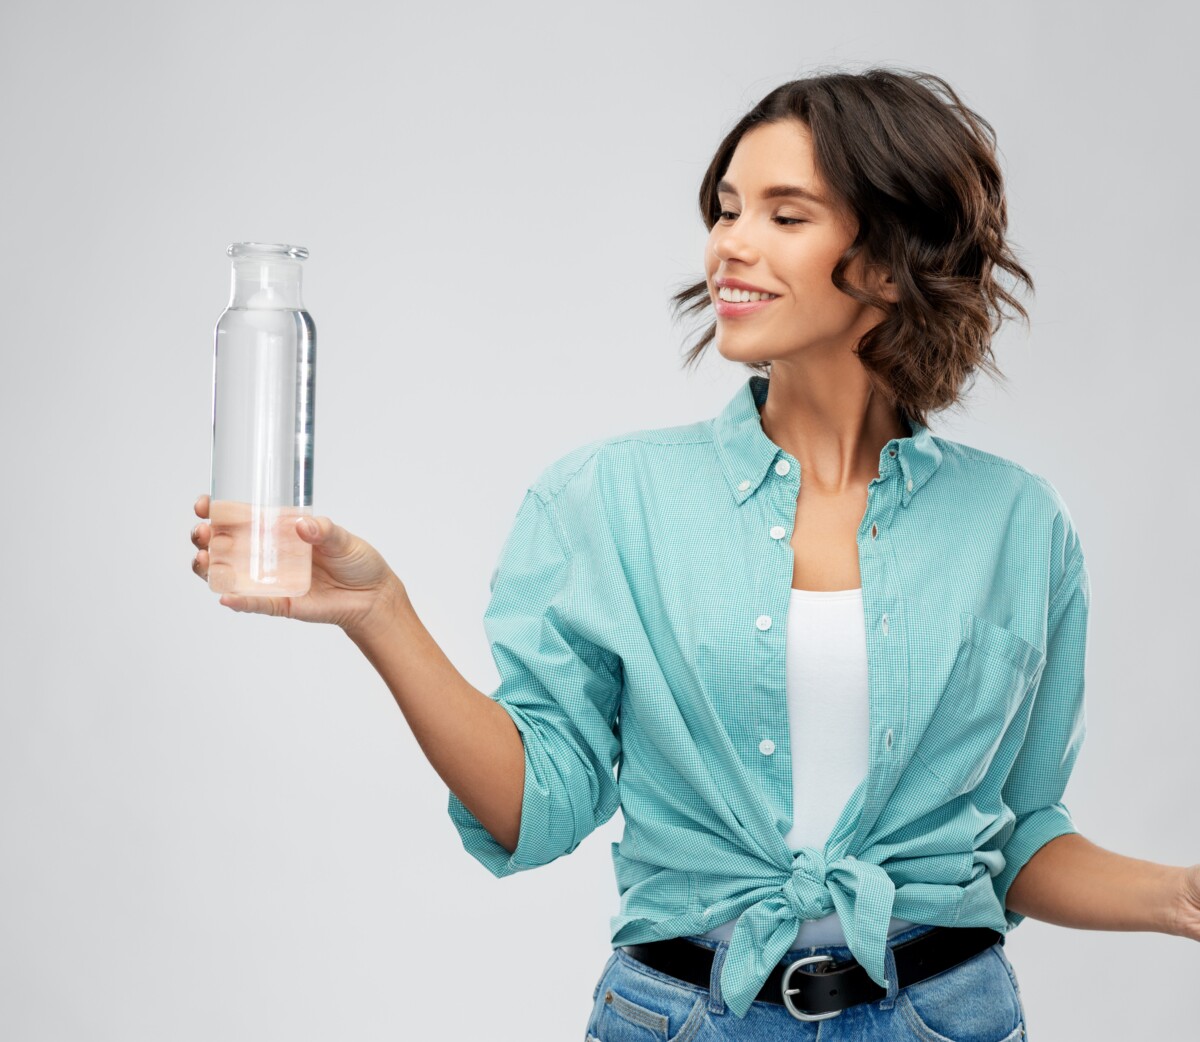 Brands Of Water In Glass Bottles